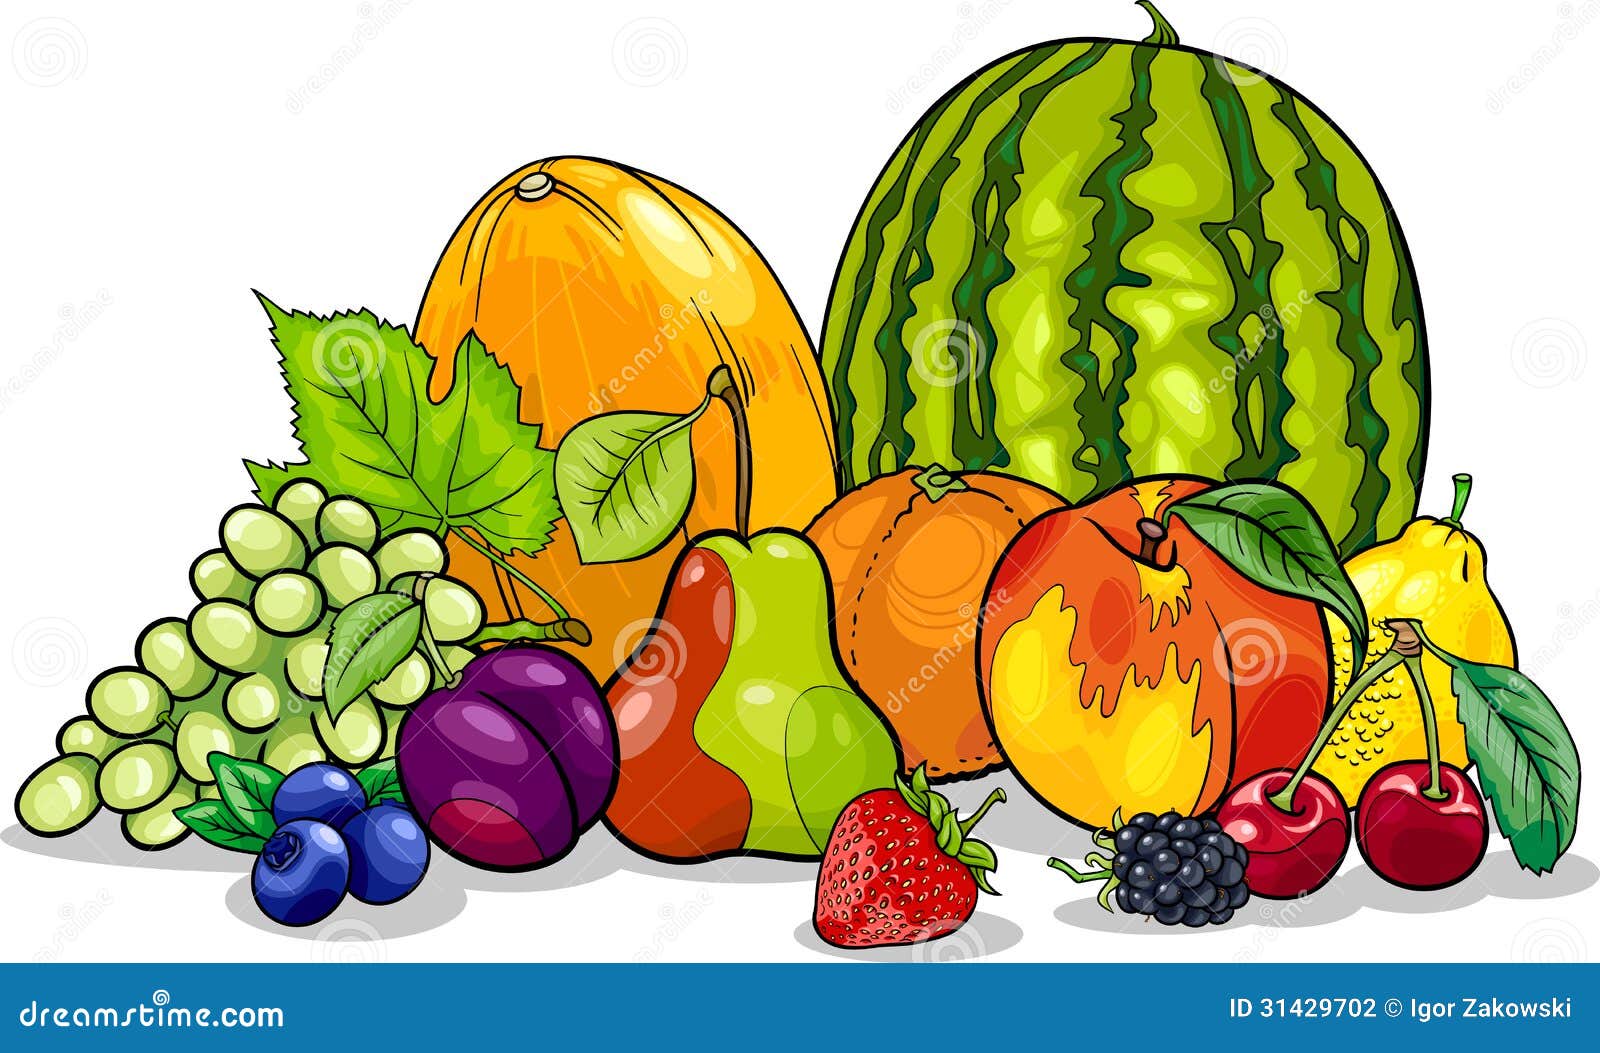 Fruits Group Cartoon Illustration Stock Vector - Illustration of health,  plum: 31429702